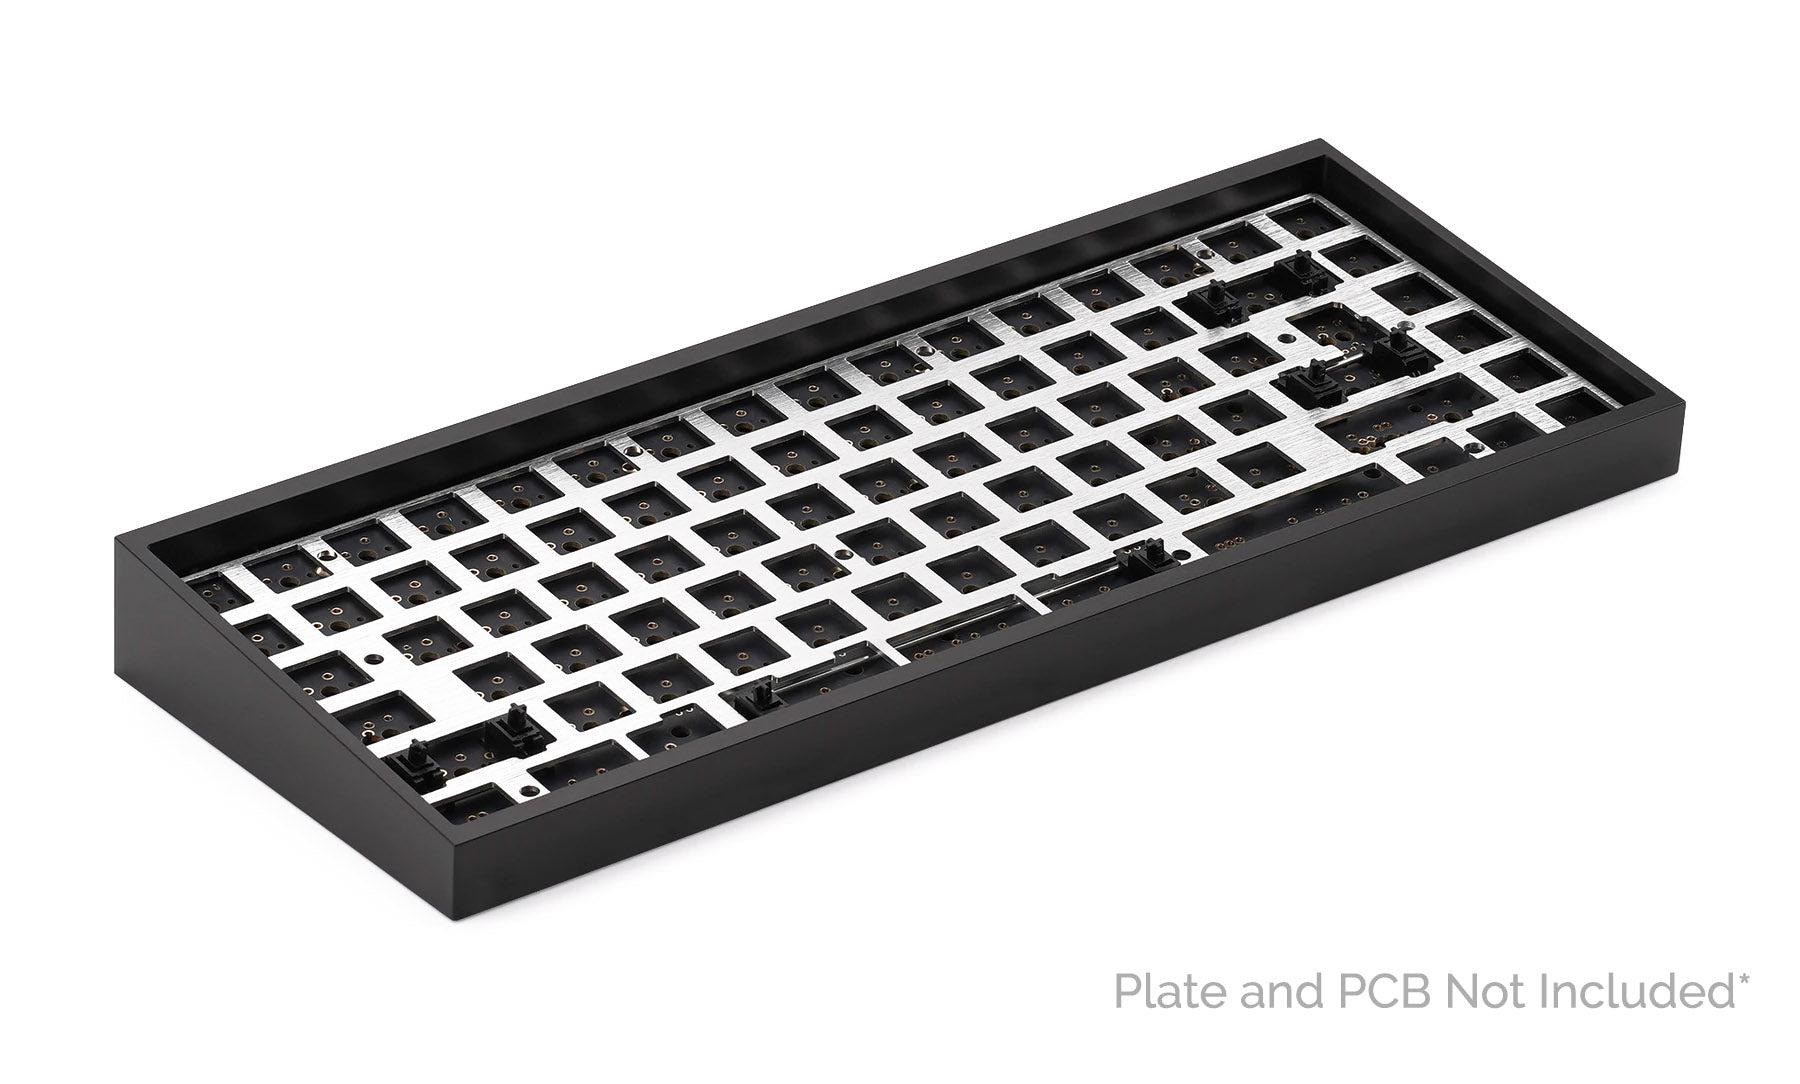 KBDFans Tofu 84 Aluminum Mechanical Keyboard Case MKEUD89PJ0 |63231|